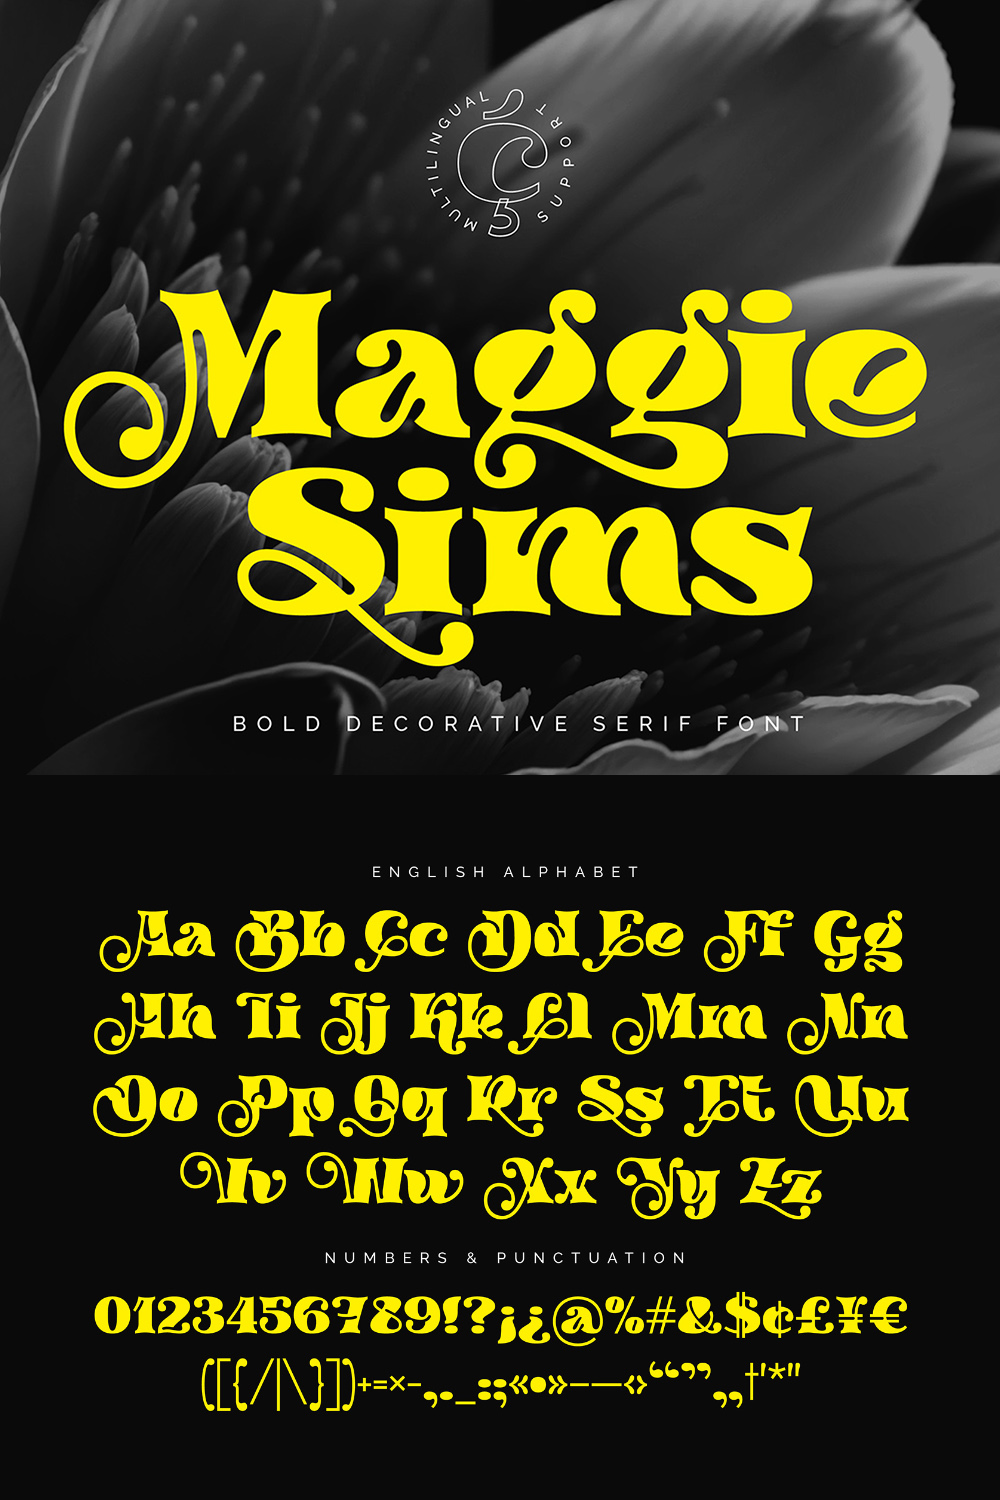 Maggie Sims - Bold Decorative Serif Font pinterest preview image.